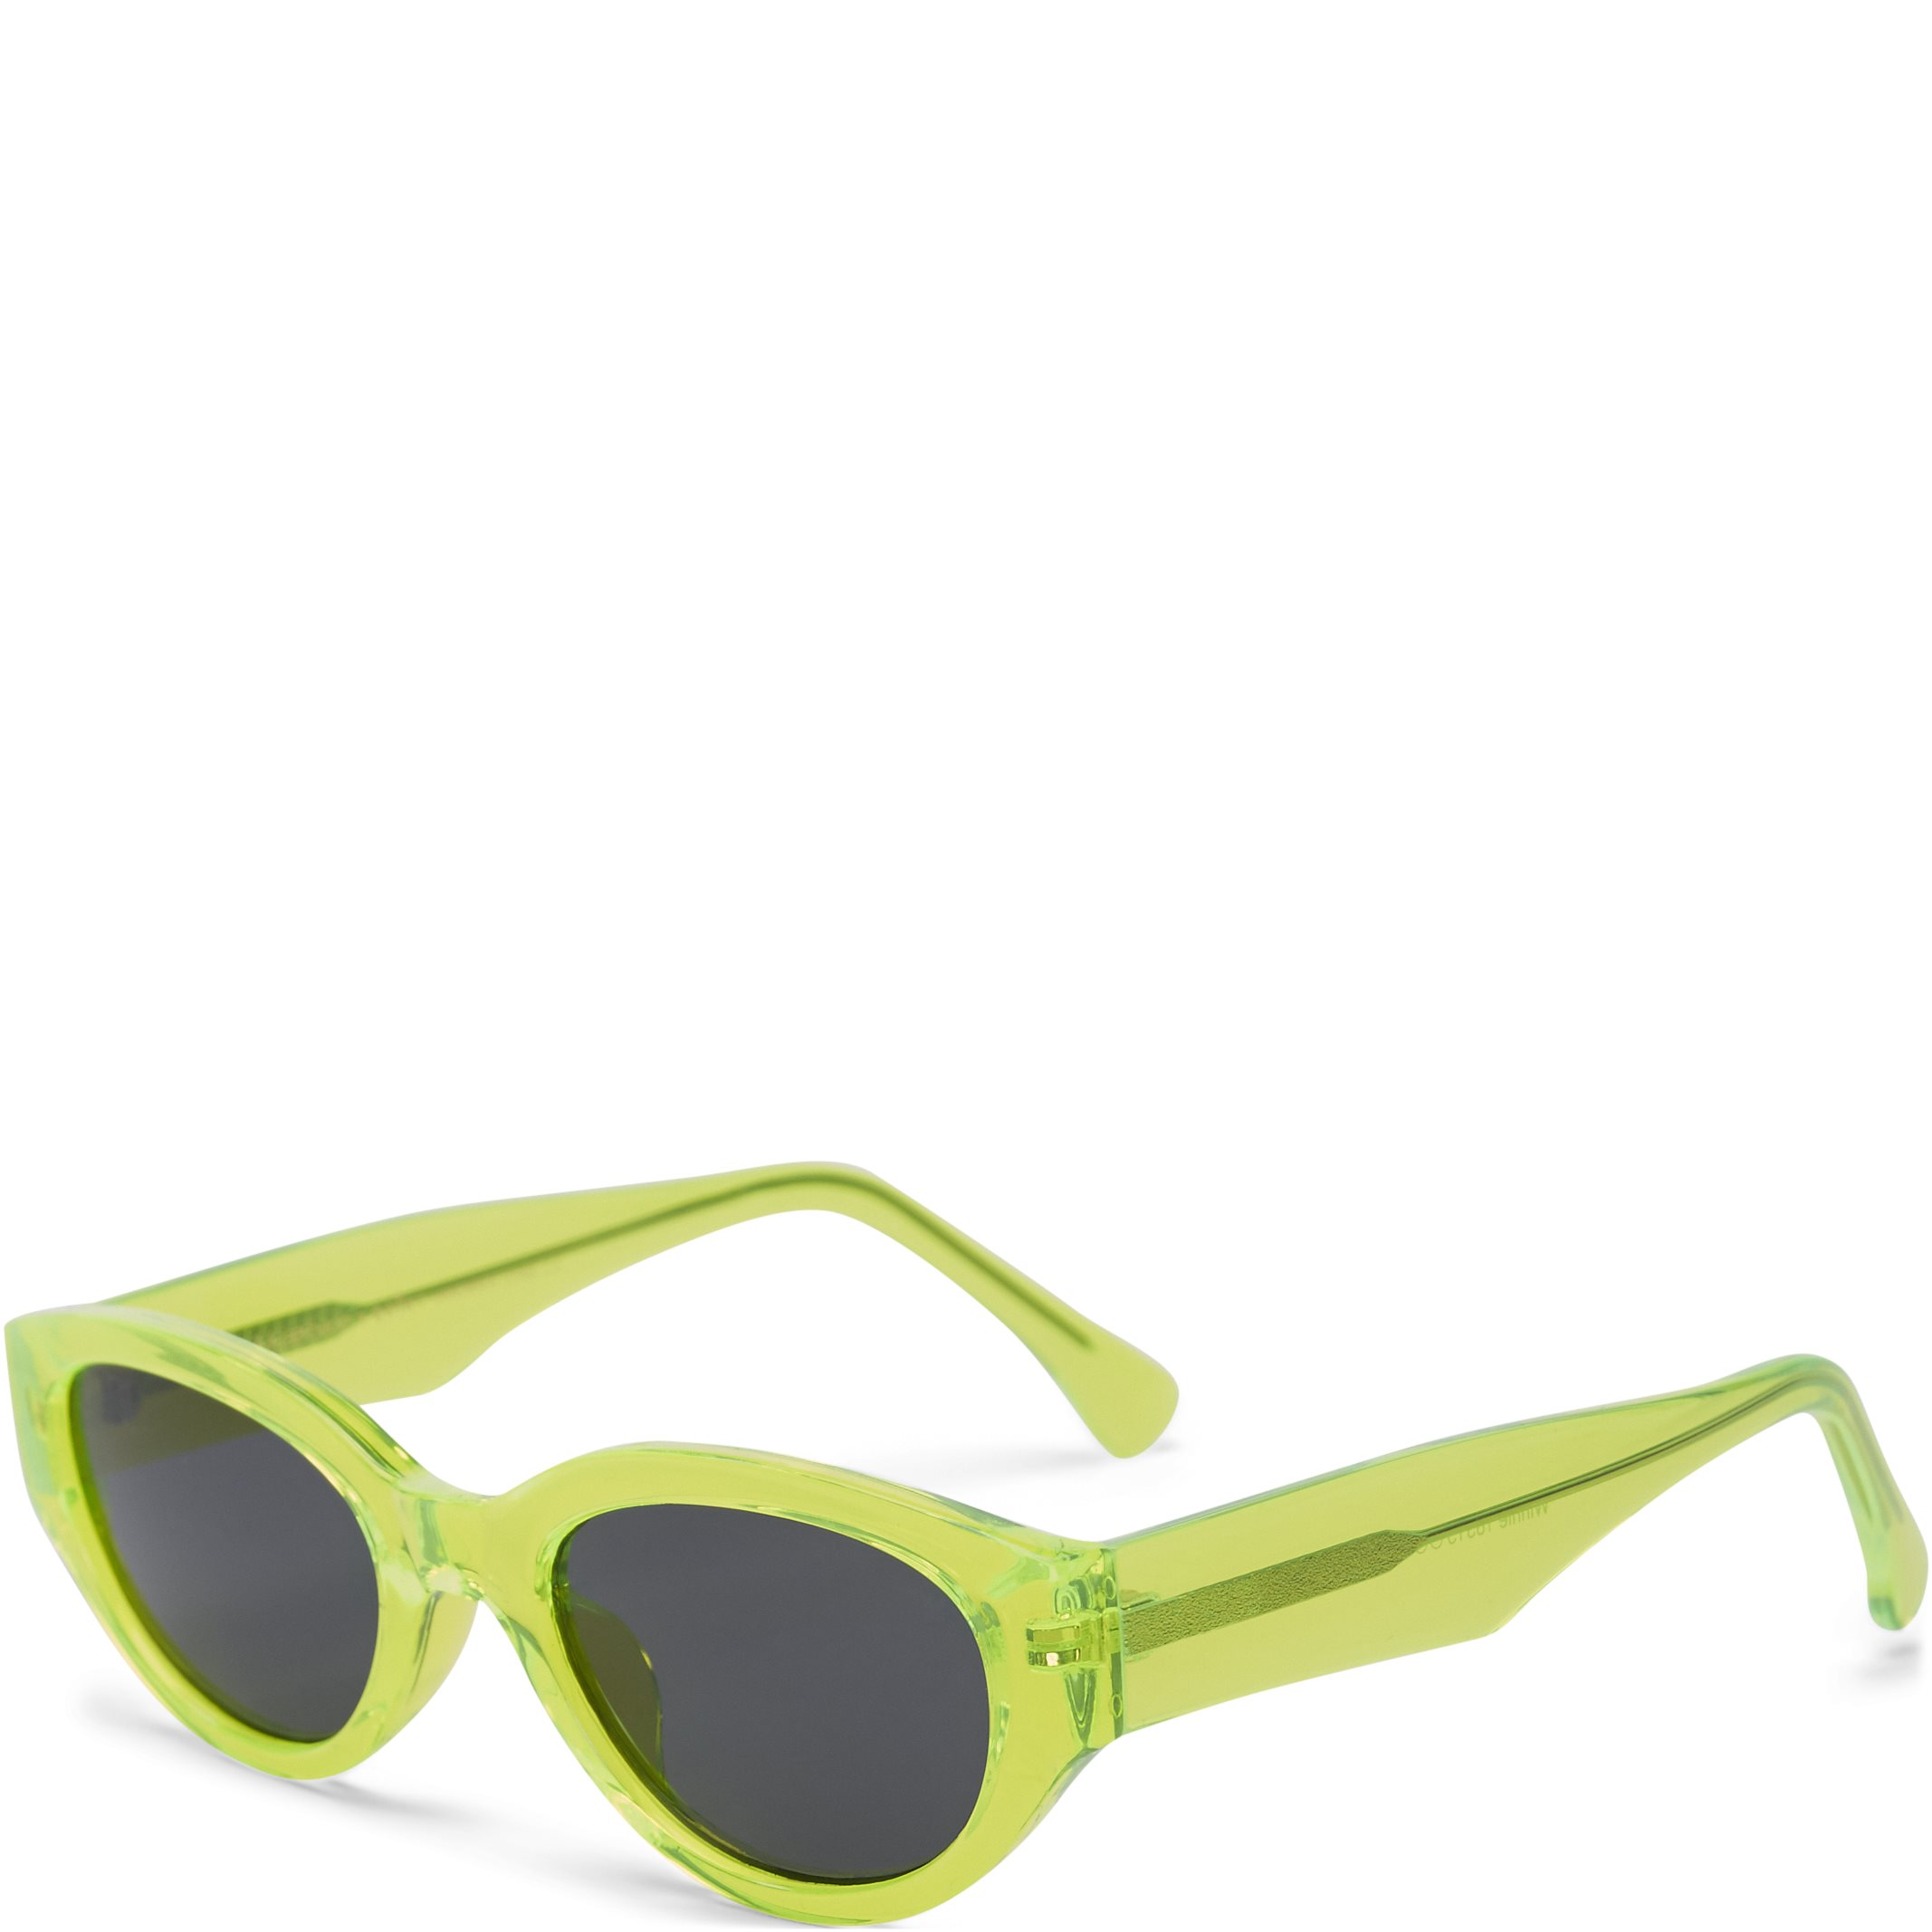 Winnie Sunglasses - Accessories - Green